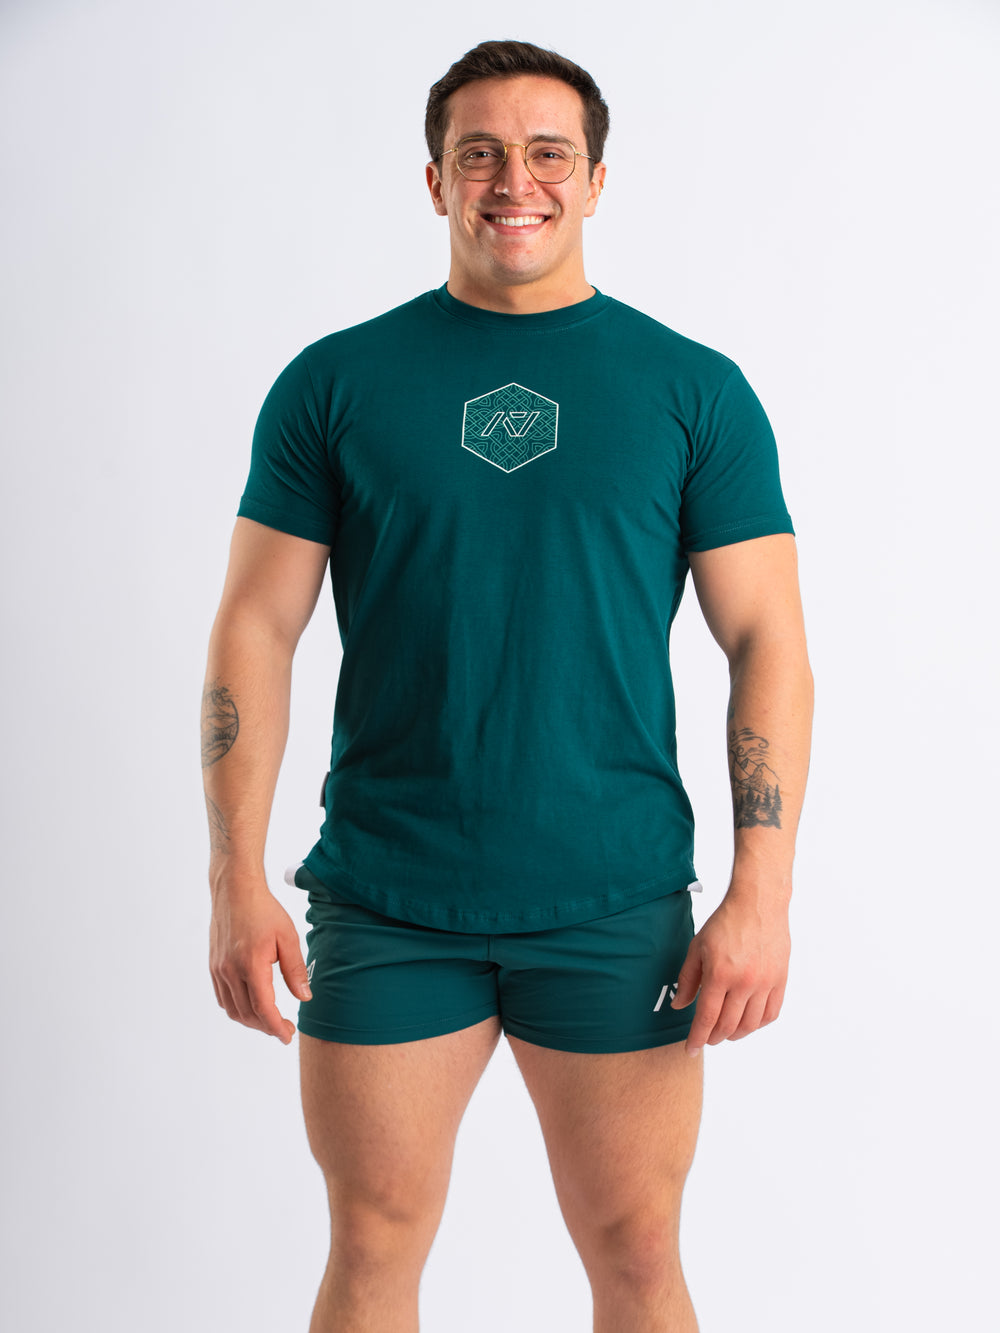 Lifts Men's EDC Shirt - Emerald Forás